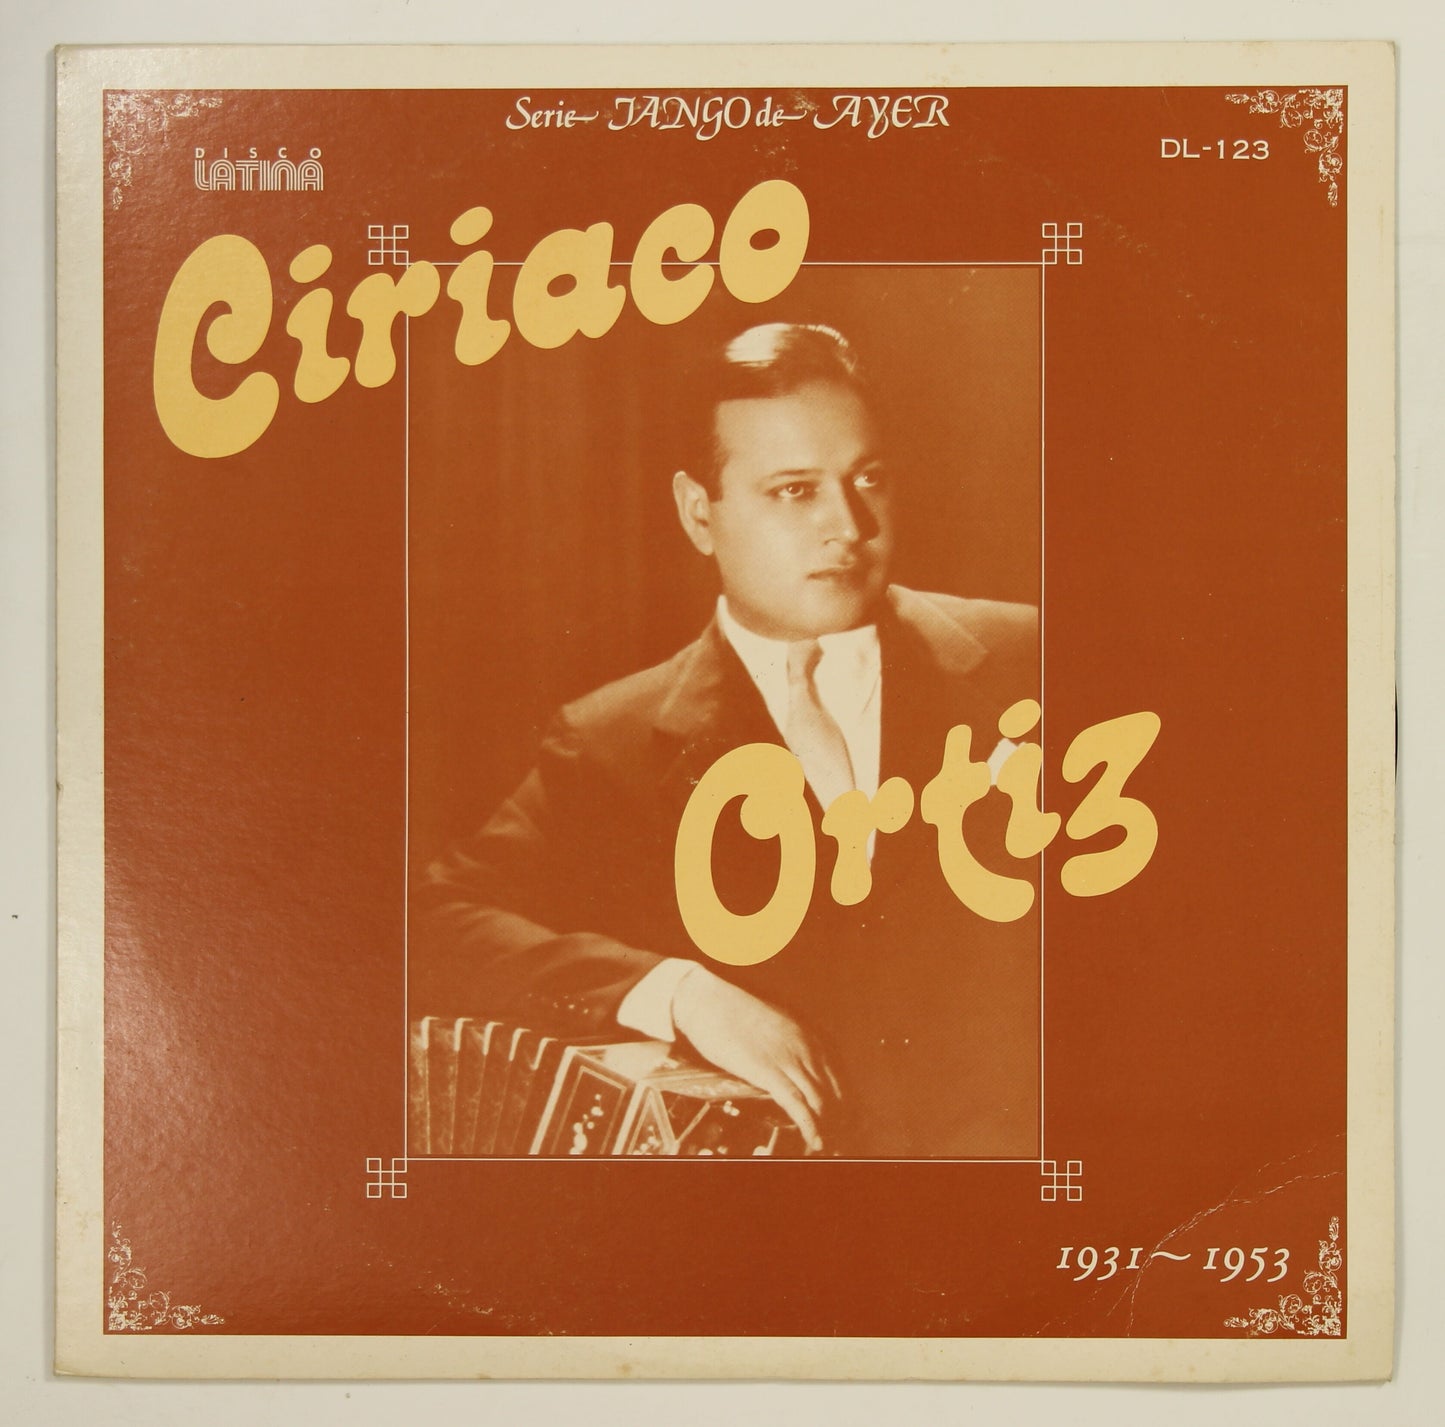 CIRIACO ORTIZ / シリアコ・オルティス